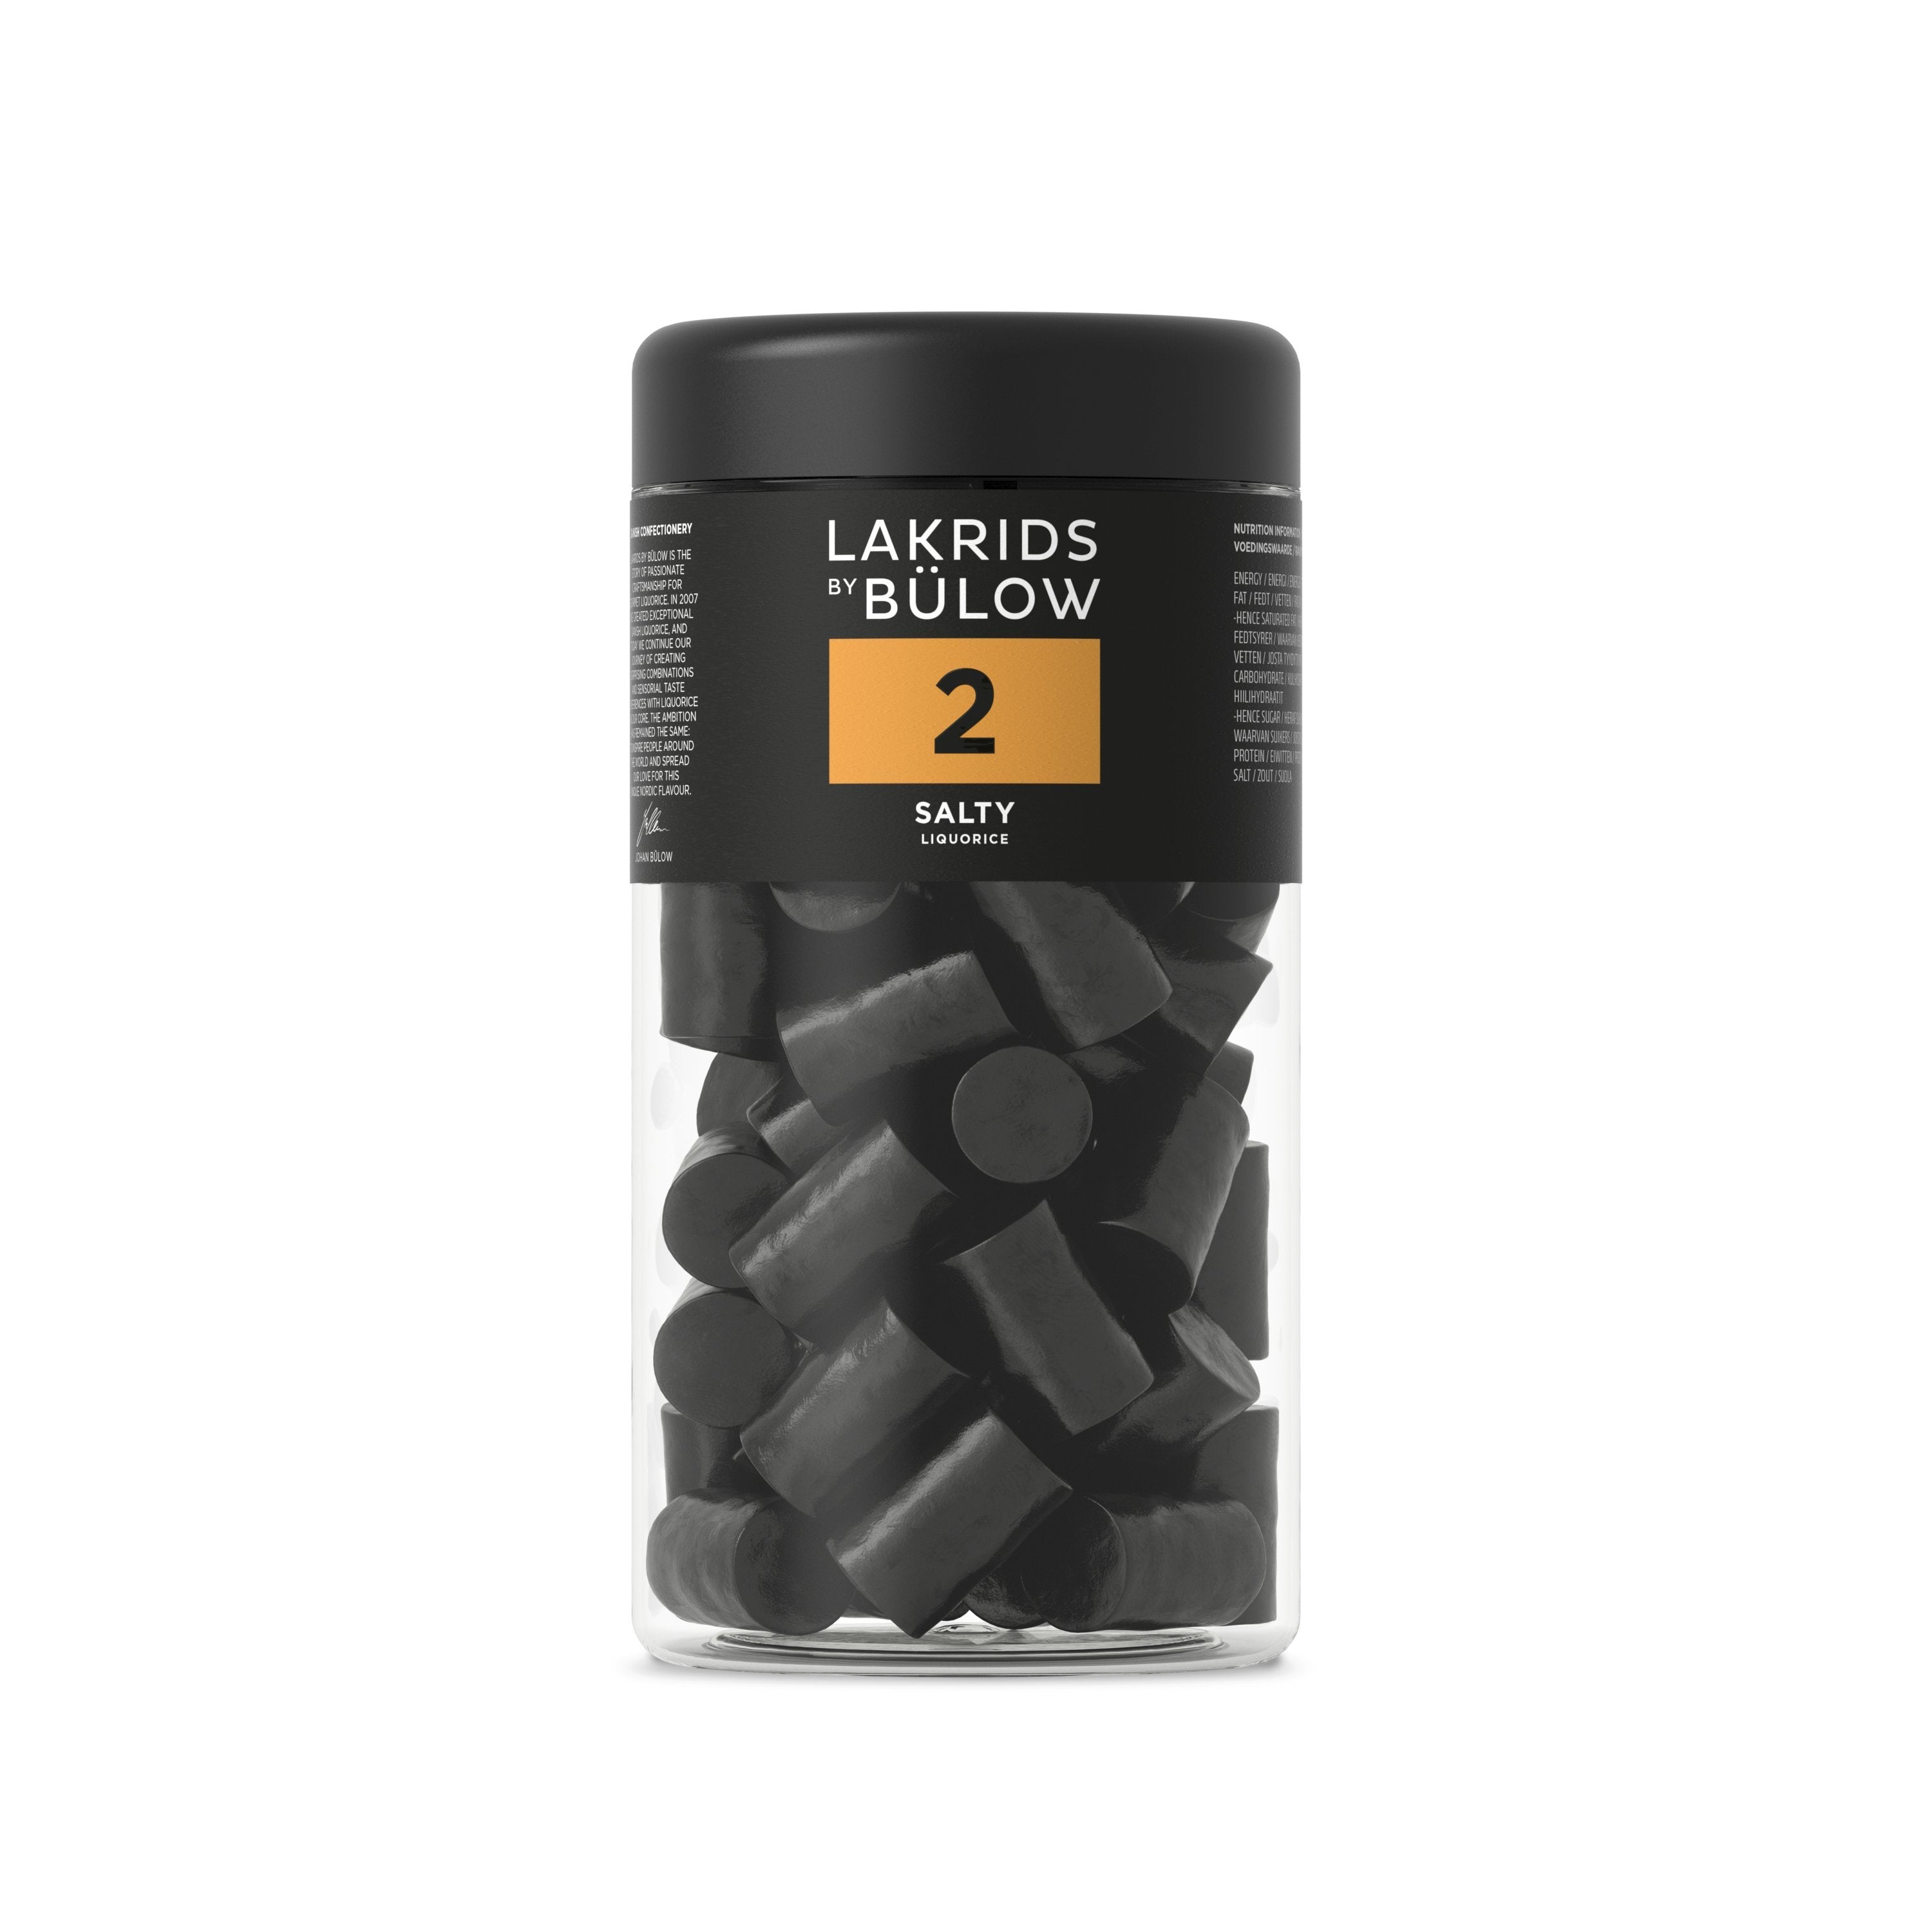 Lakrids by Bülow 2-salt, 360 gram